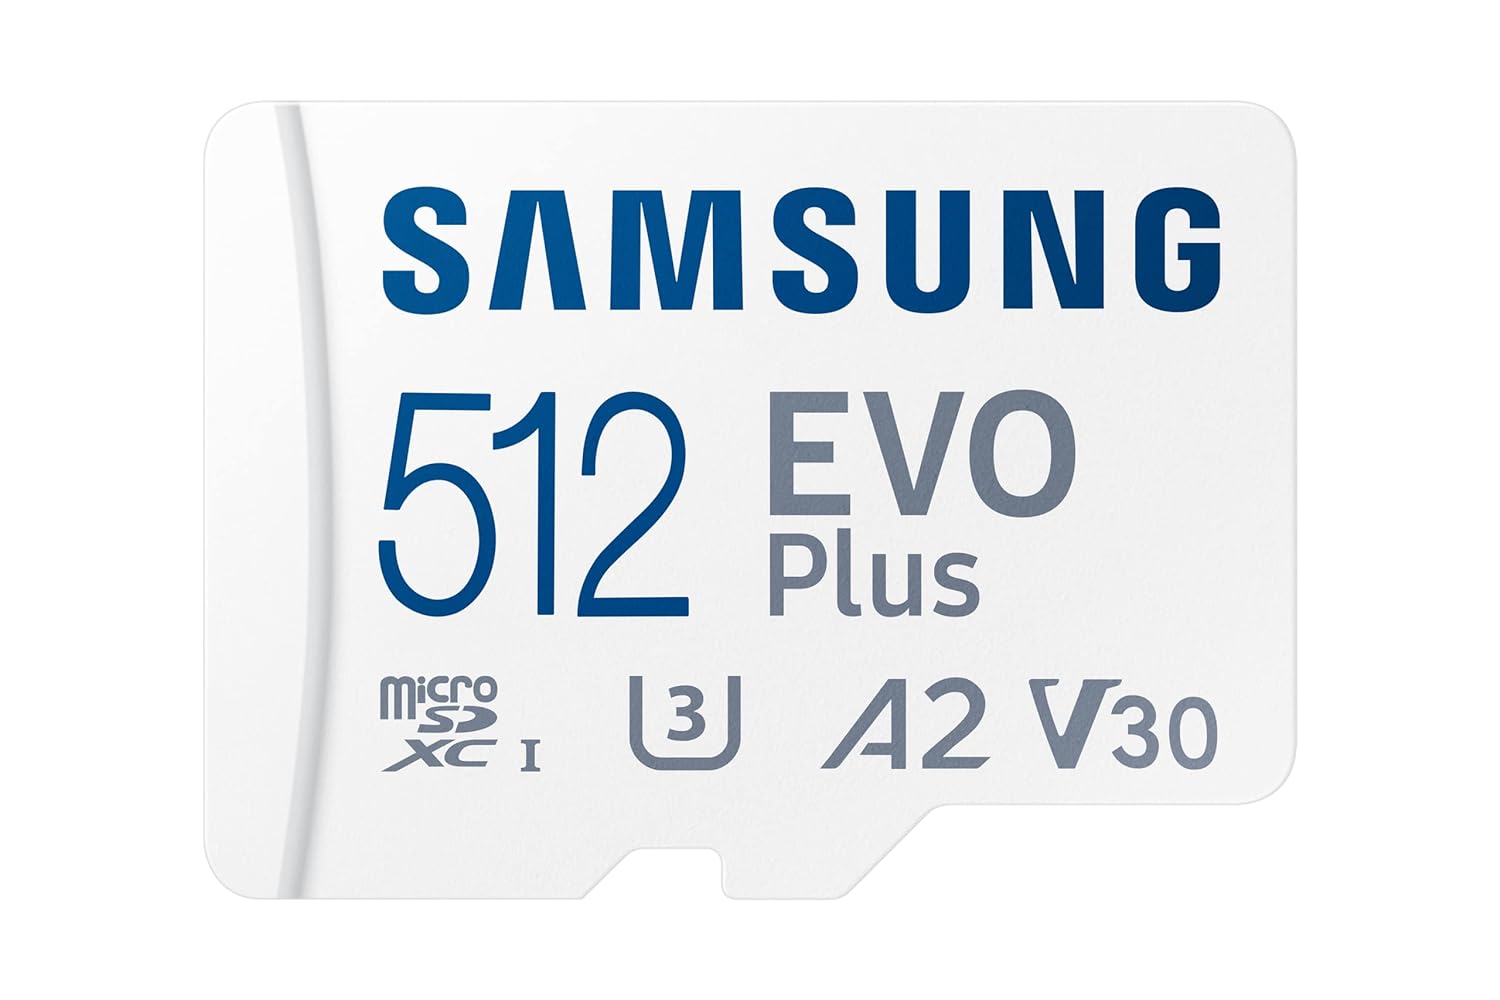 SAMSUNG Evo Plus 512 GB MicroSDXC Class 10 130 MB/s Memory Card  (With Adapter)